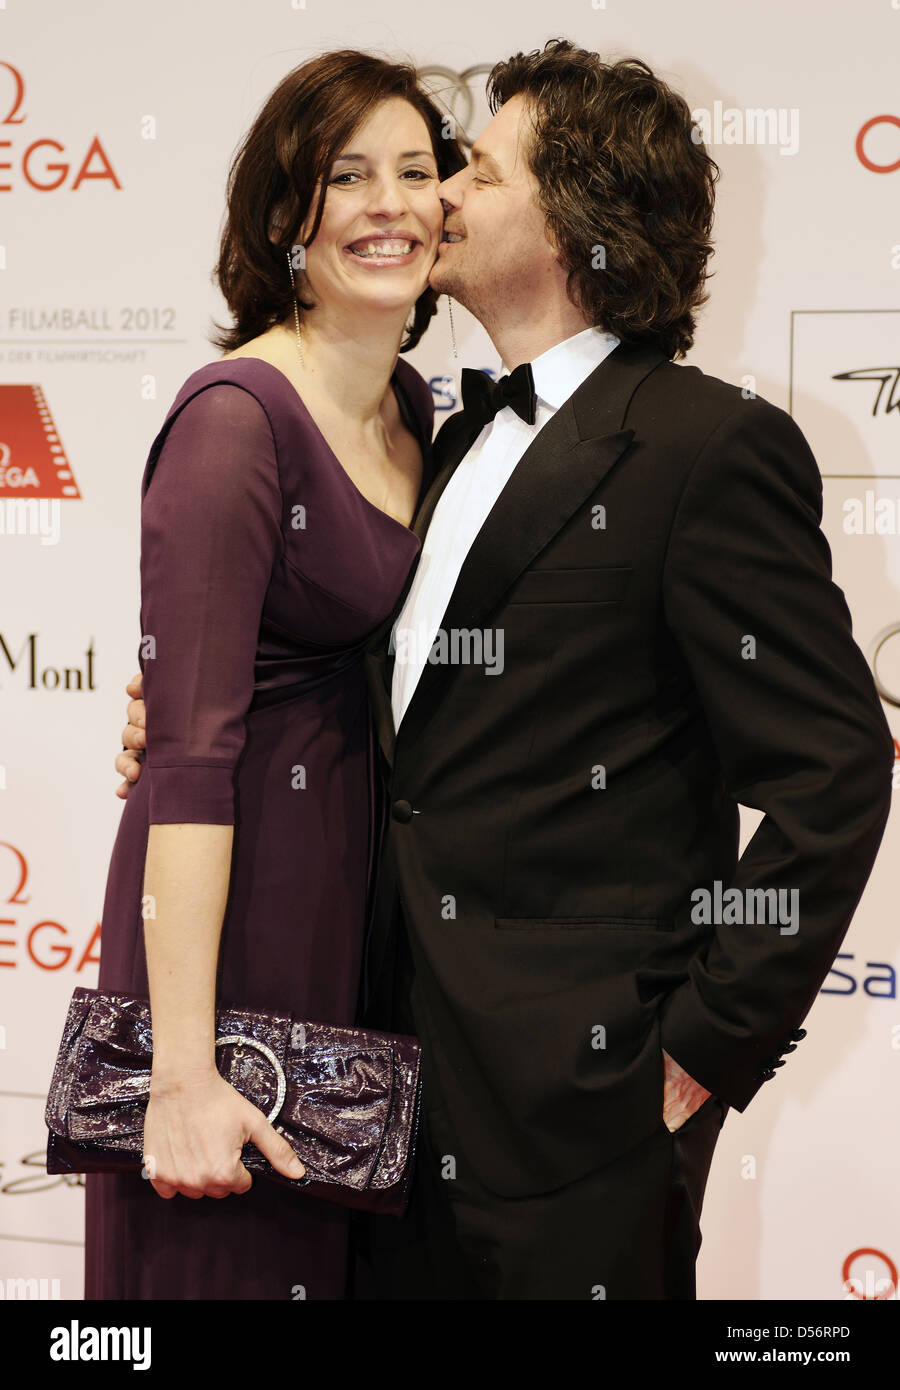 Elena Uhlig and Fritz Karl at 39th Deutscher Filmball at Hotel Bayerischer Hof. Munich, Germany - 21.01.2012 Stock Photo